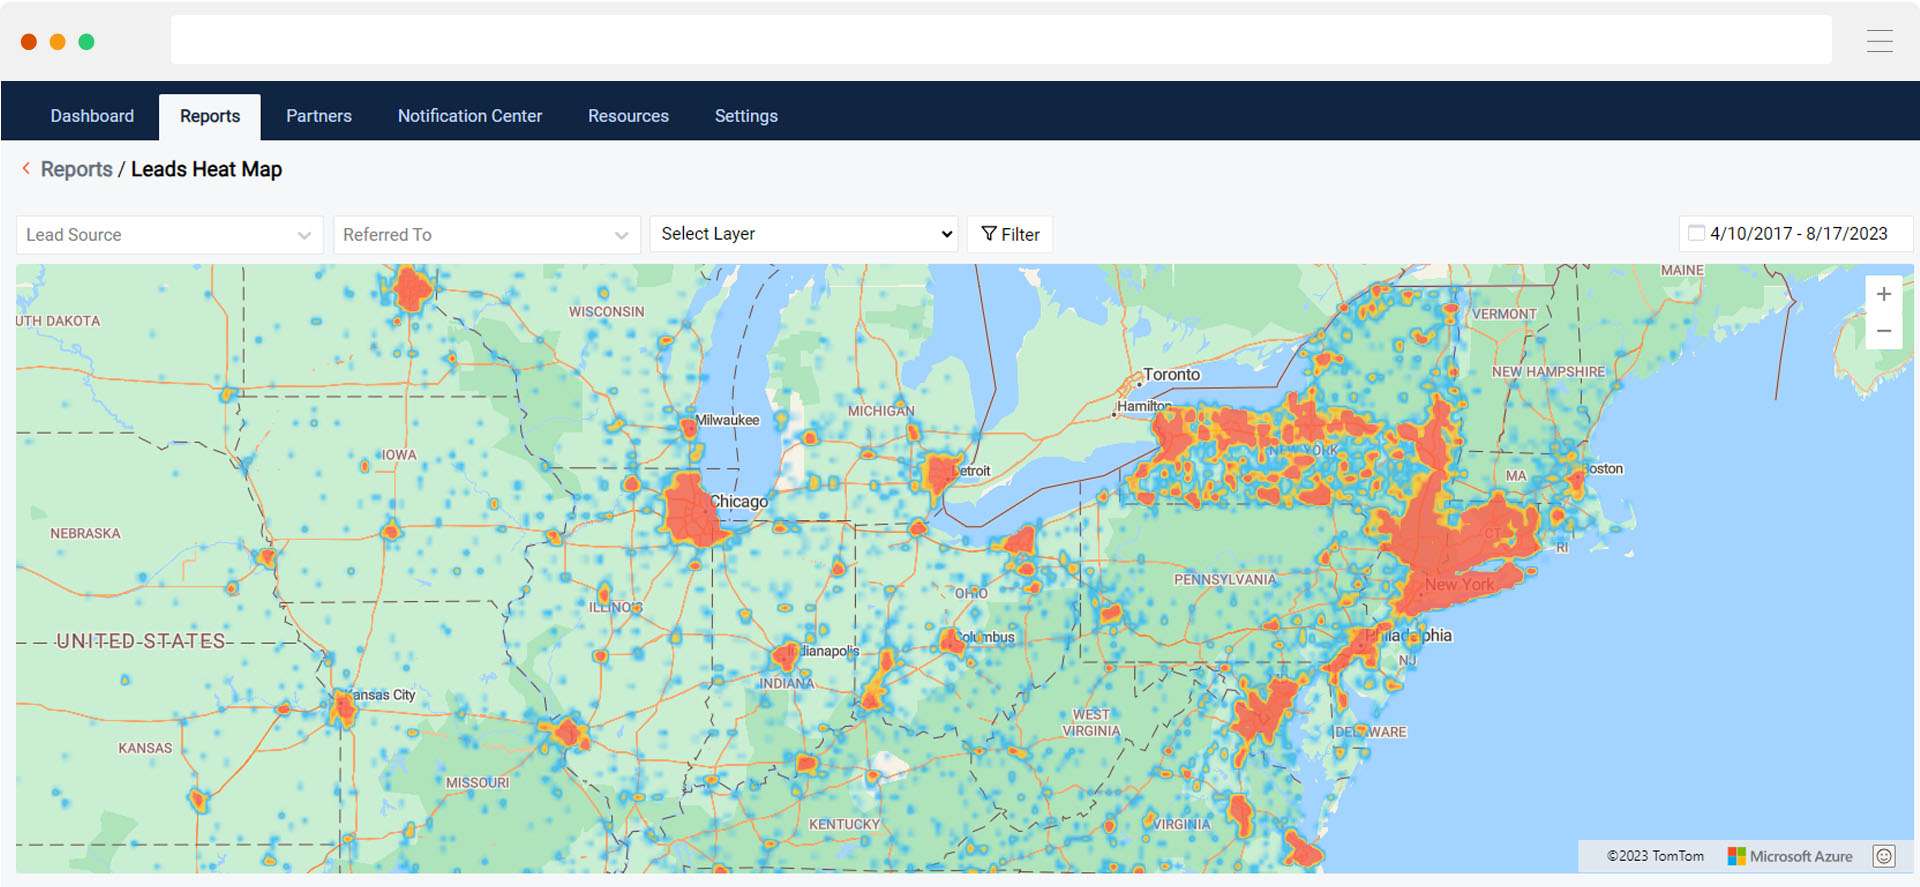 Heatmap report of businesses across the U.S.